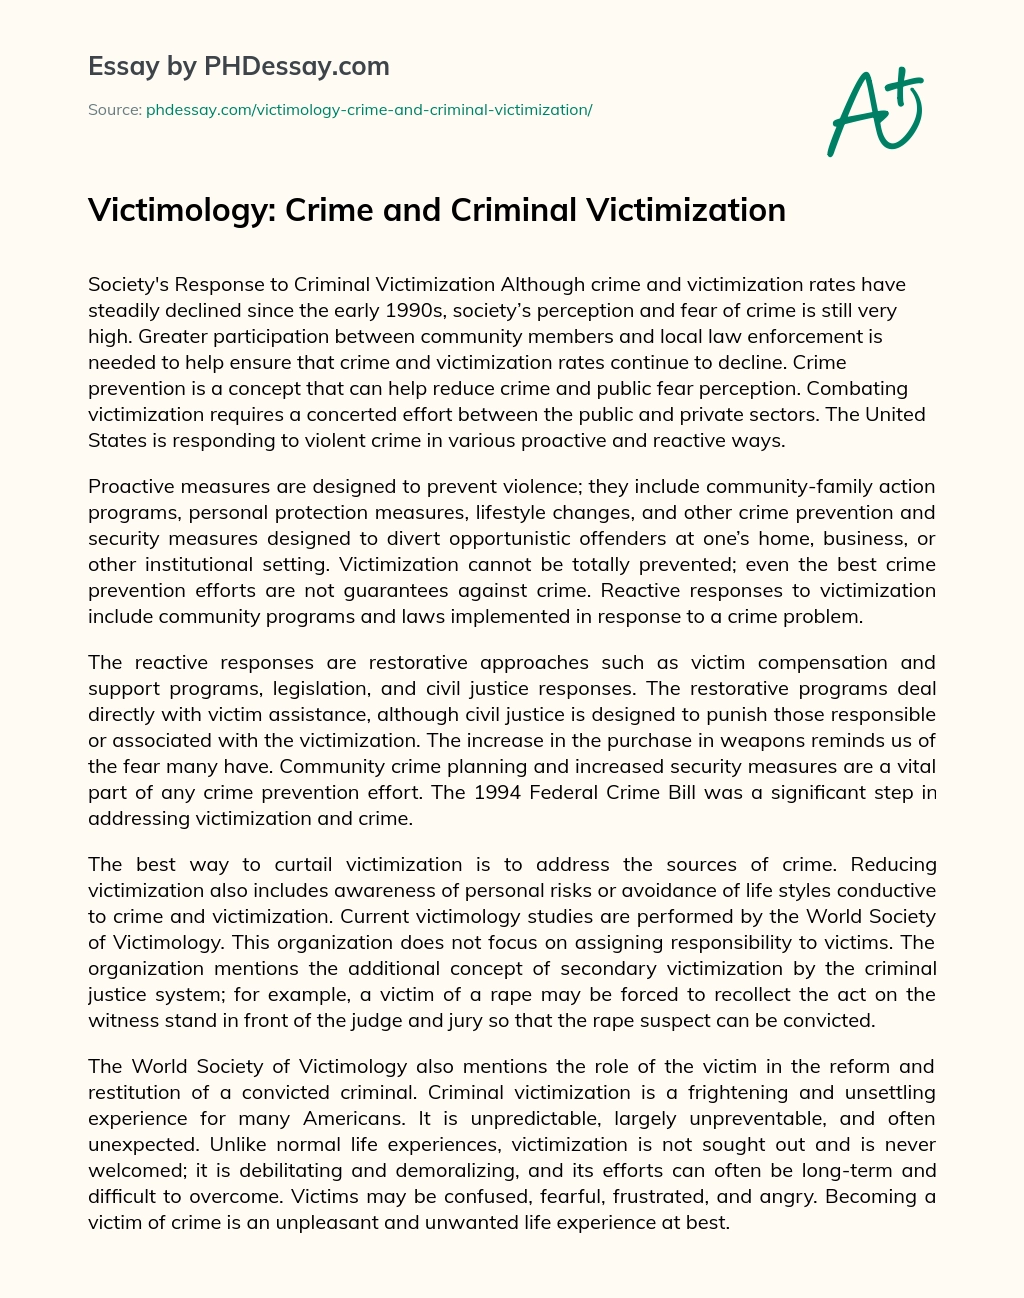 Victimology: Crime and Criminal Victimization essay